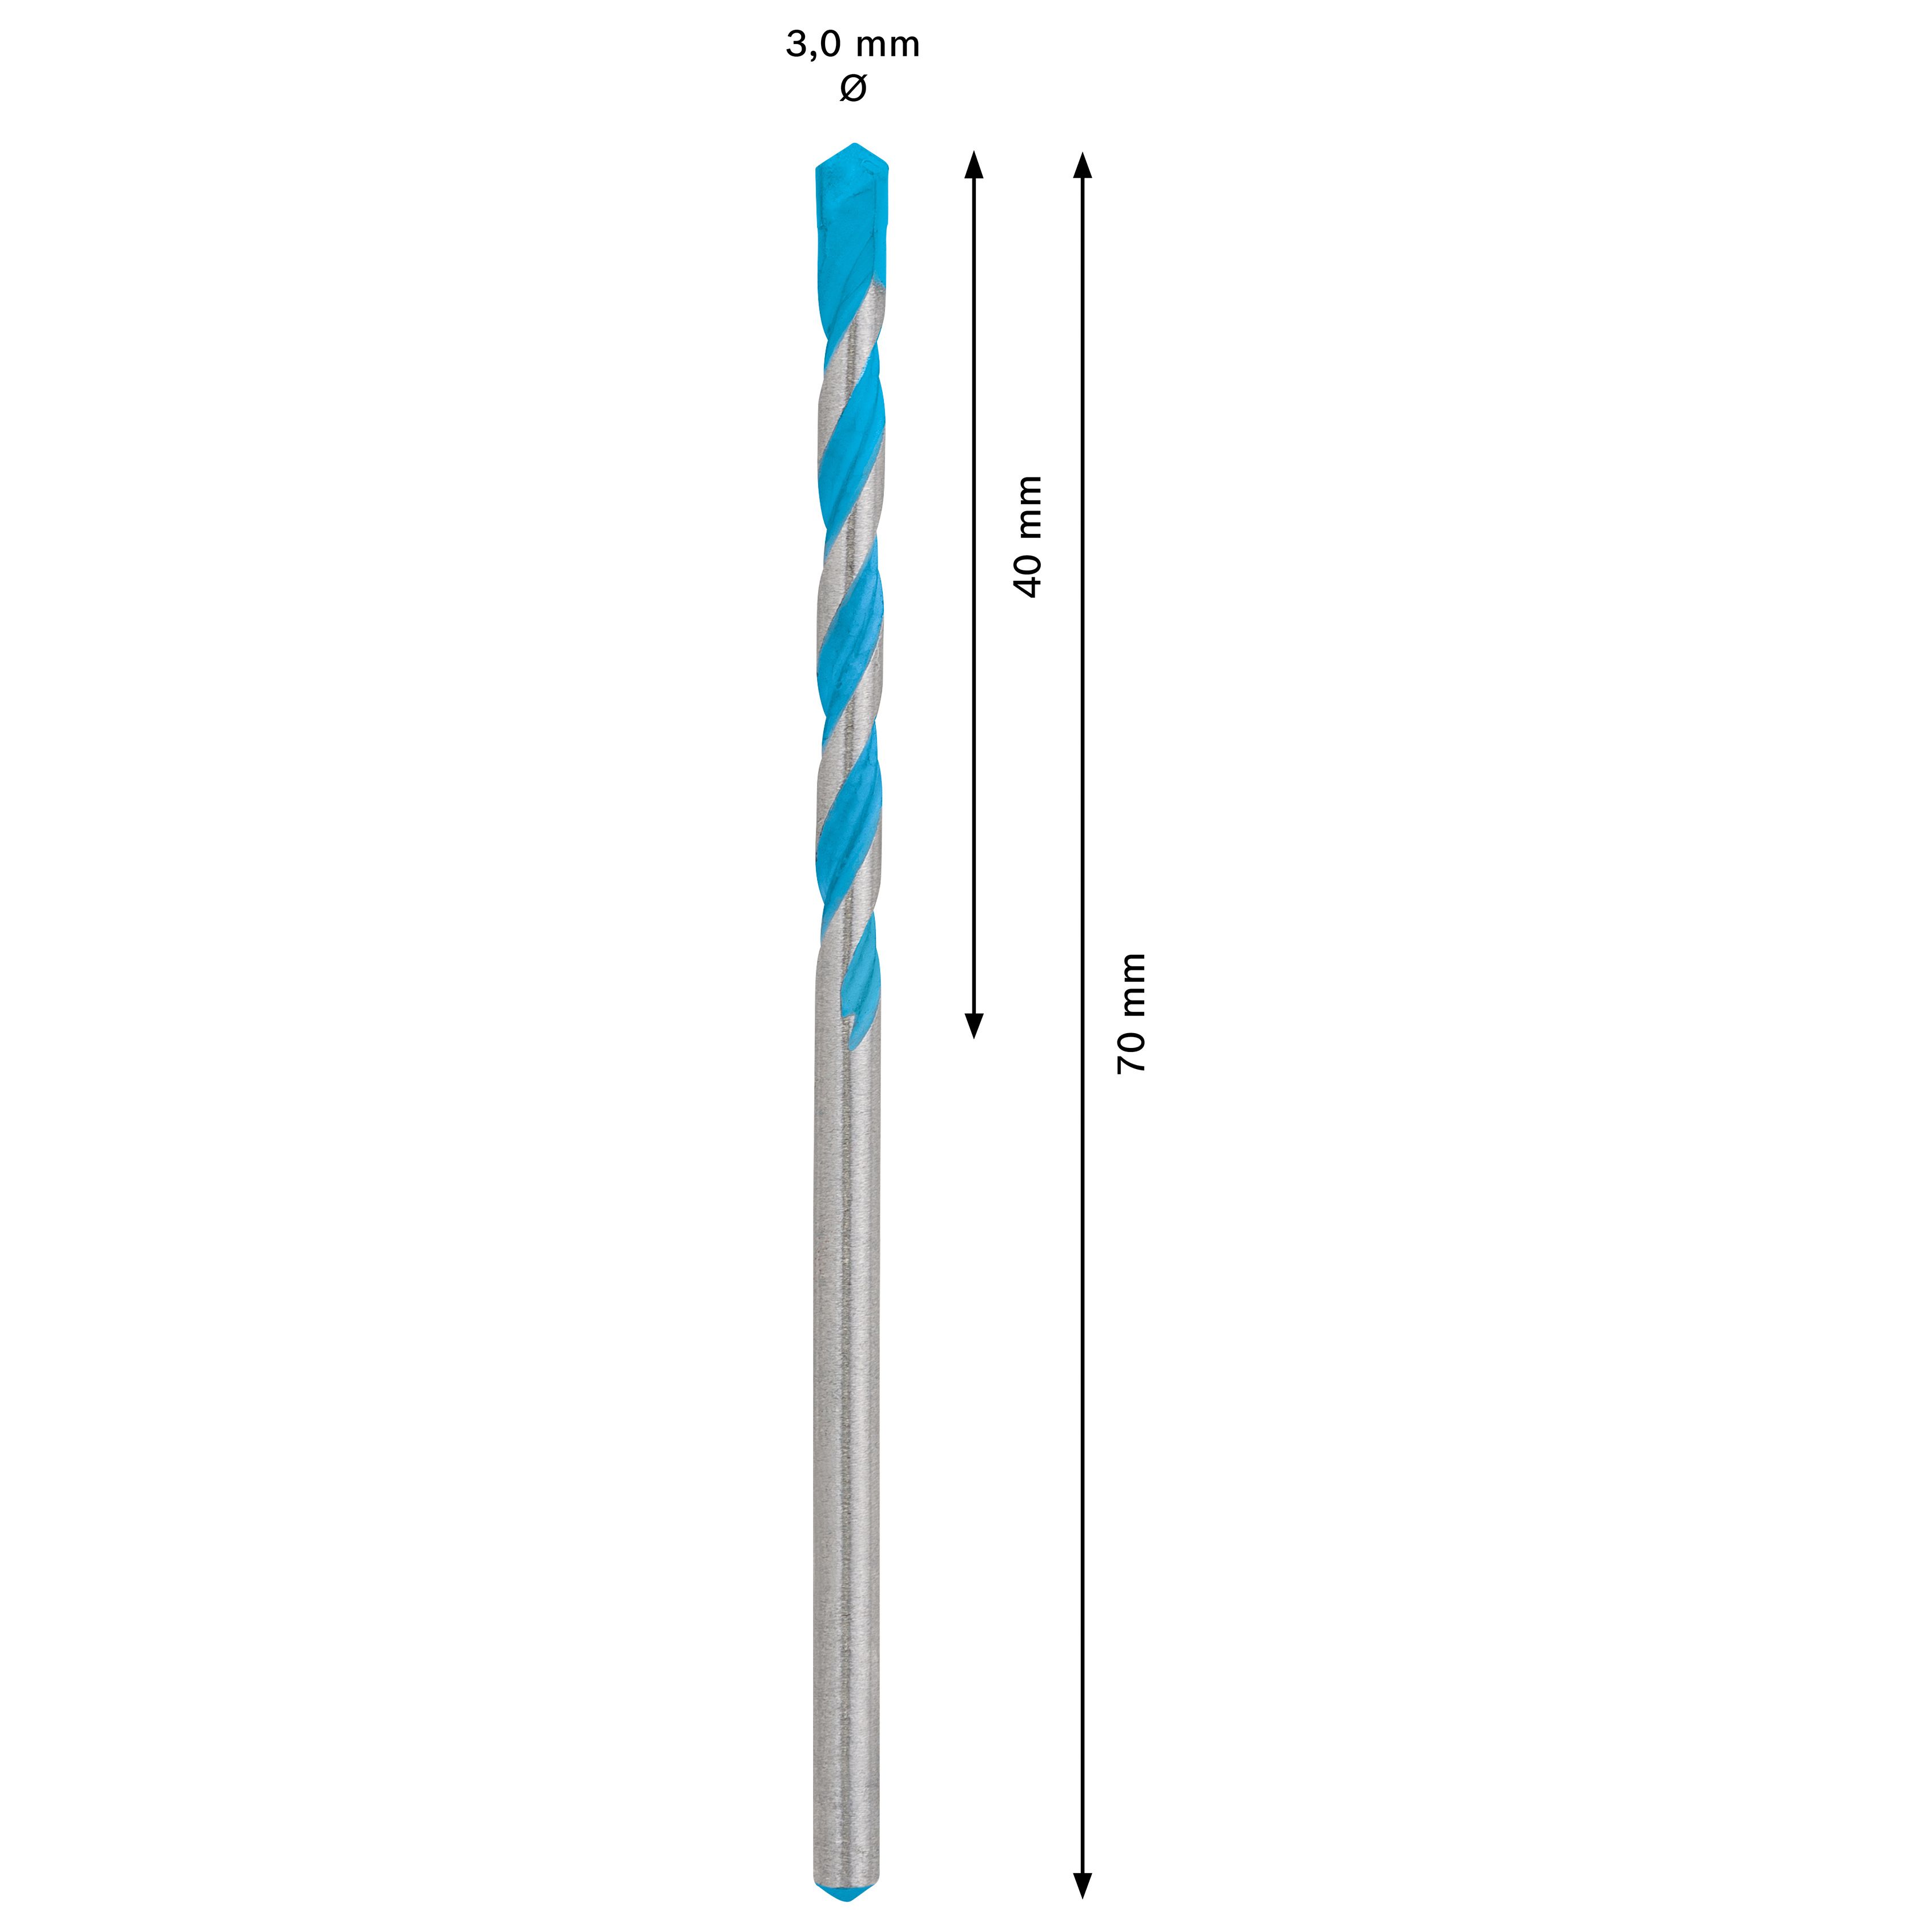 Bosch Straight Multi-purpose Drill bit (Dia)3mm (L)70mm